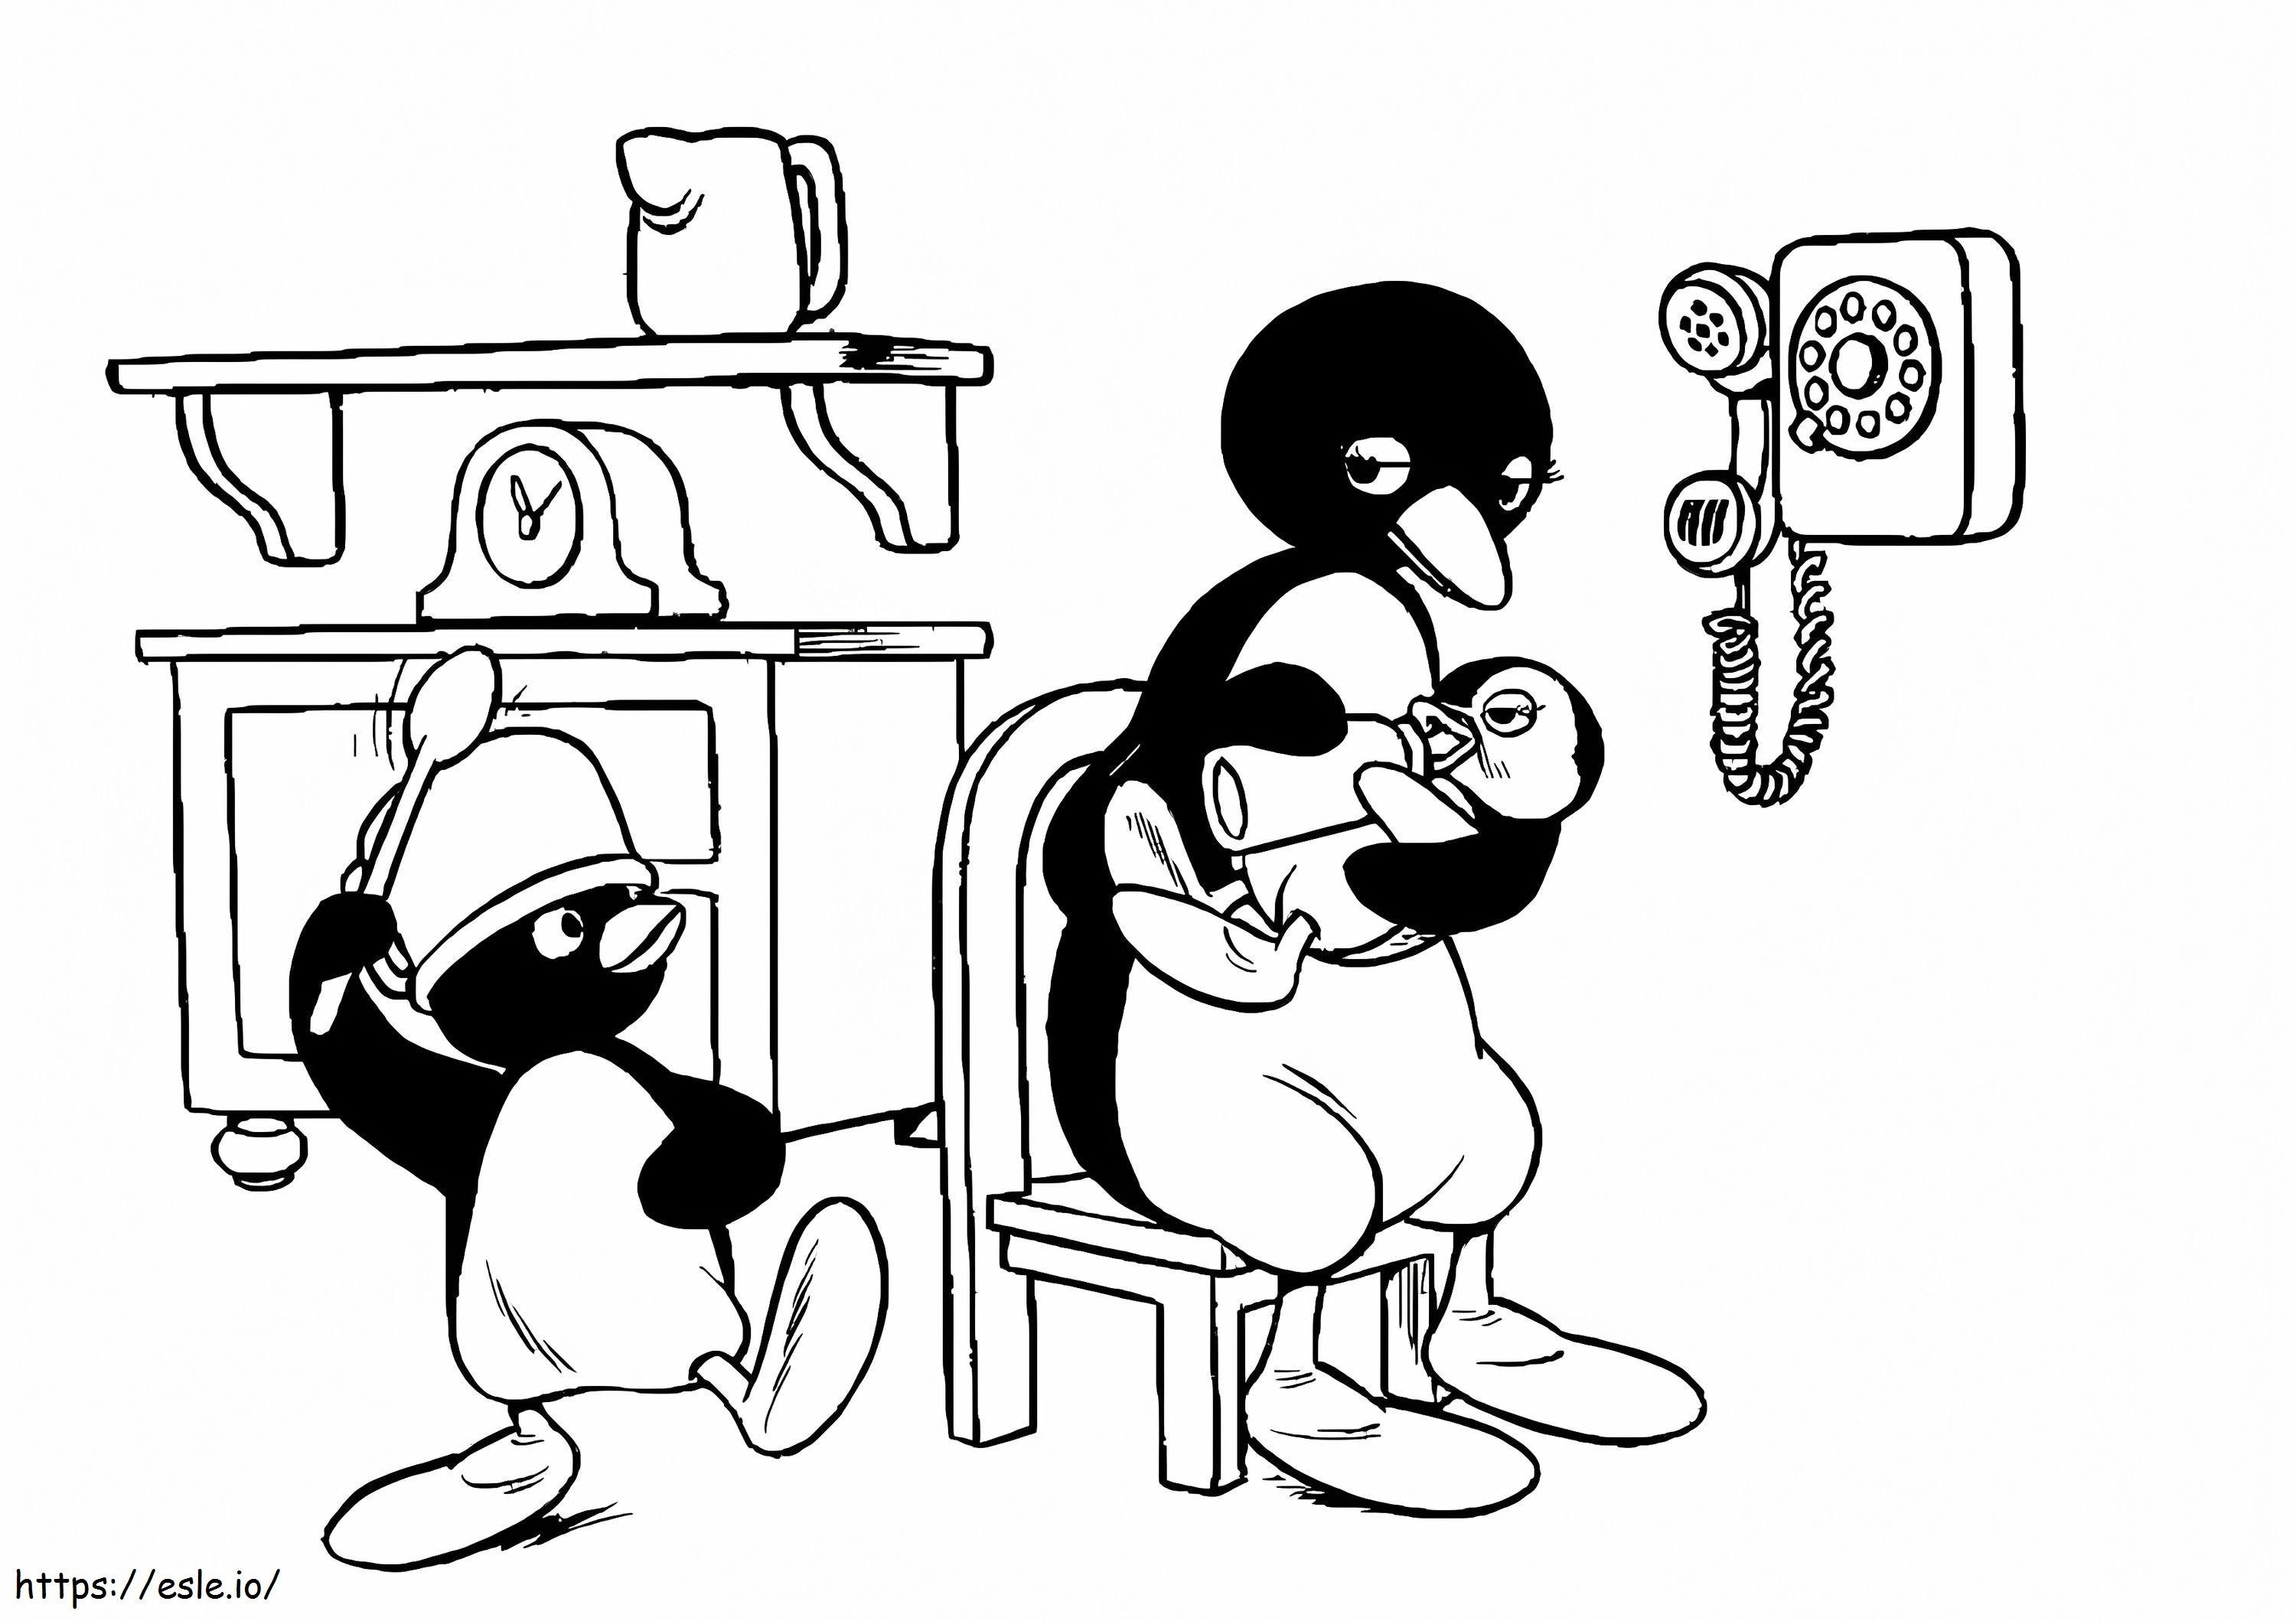 Pingu i matka kolorowanka